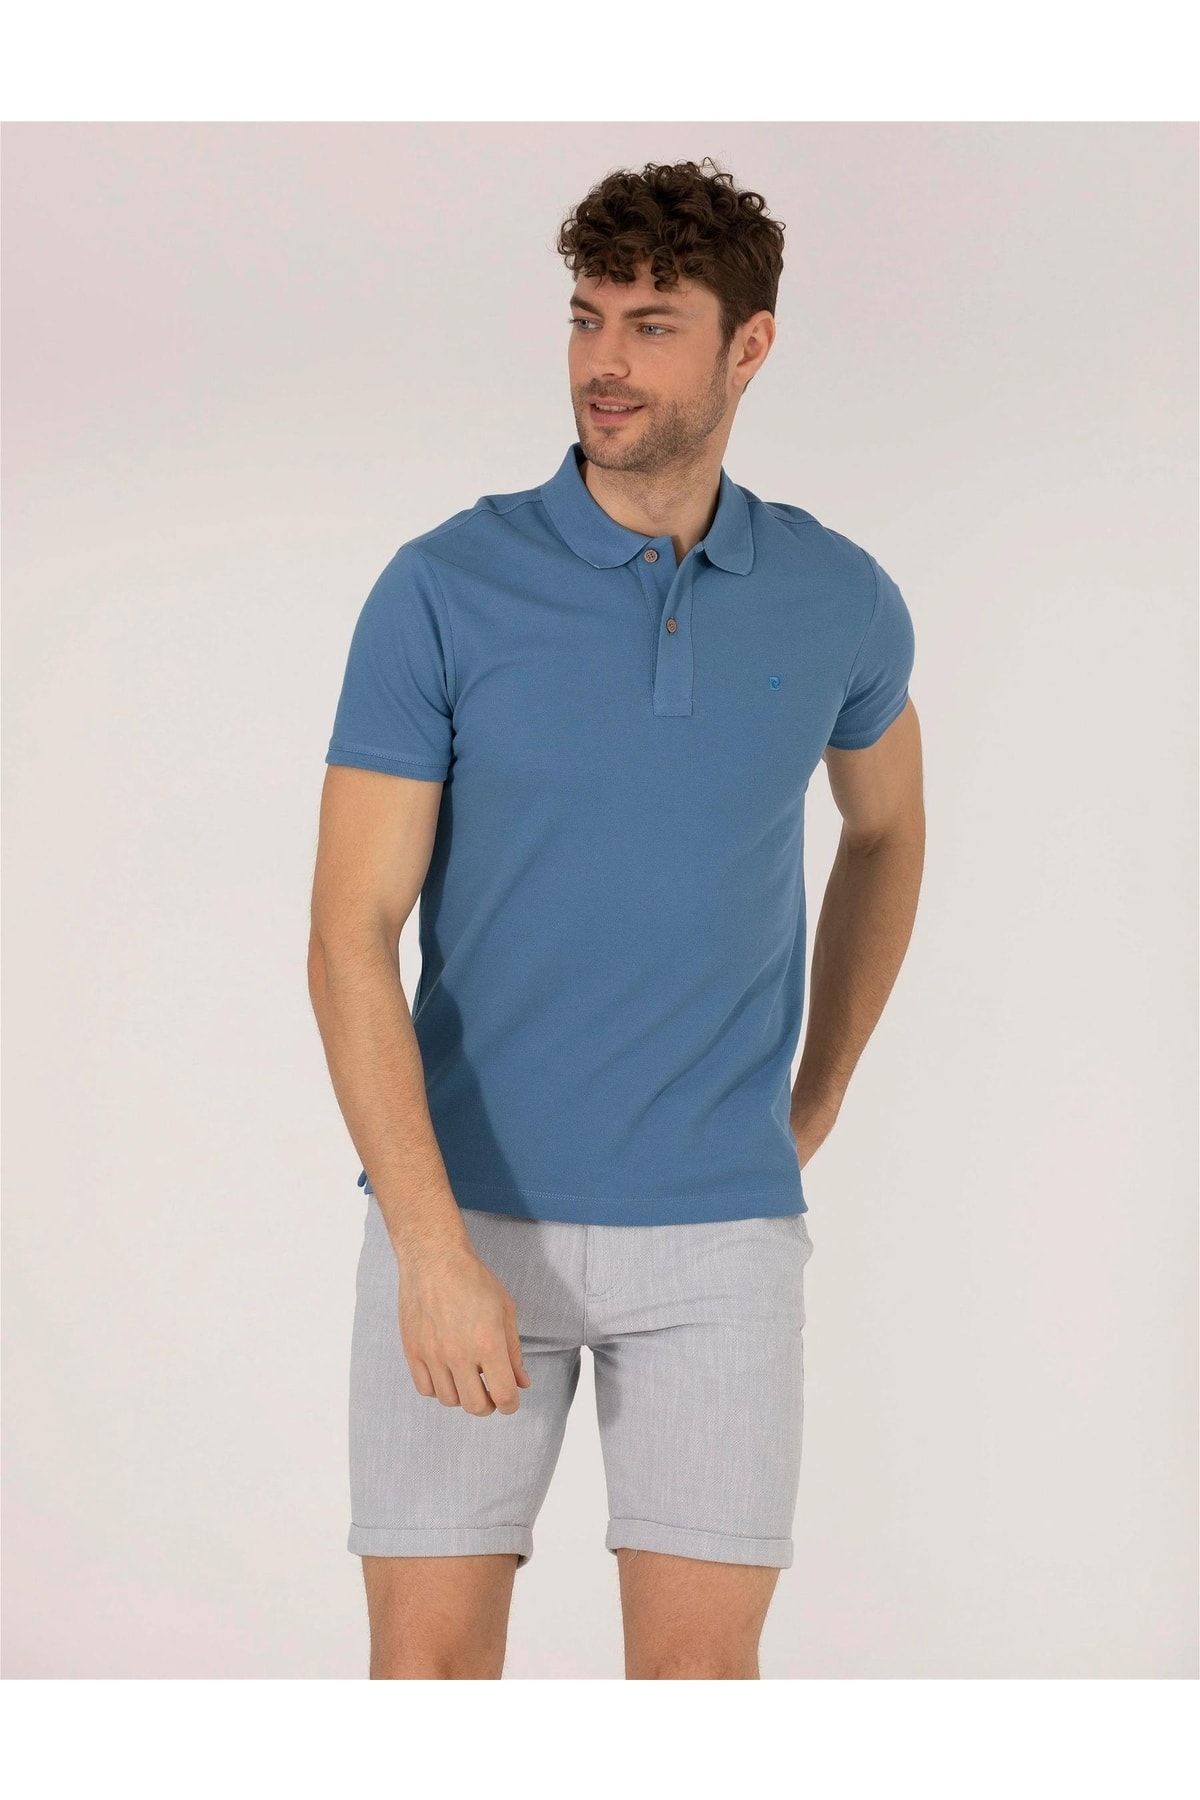 Pierre Cardin تی شرت پایه یقه پولو با تناسب معمولی آبی تیره